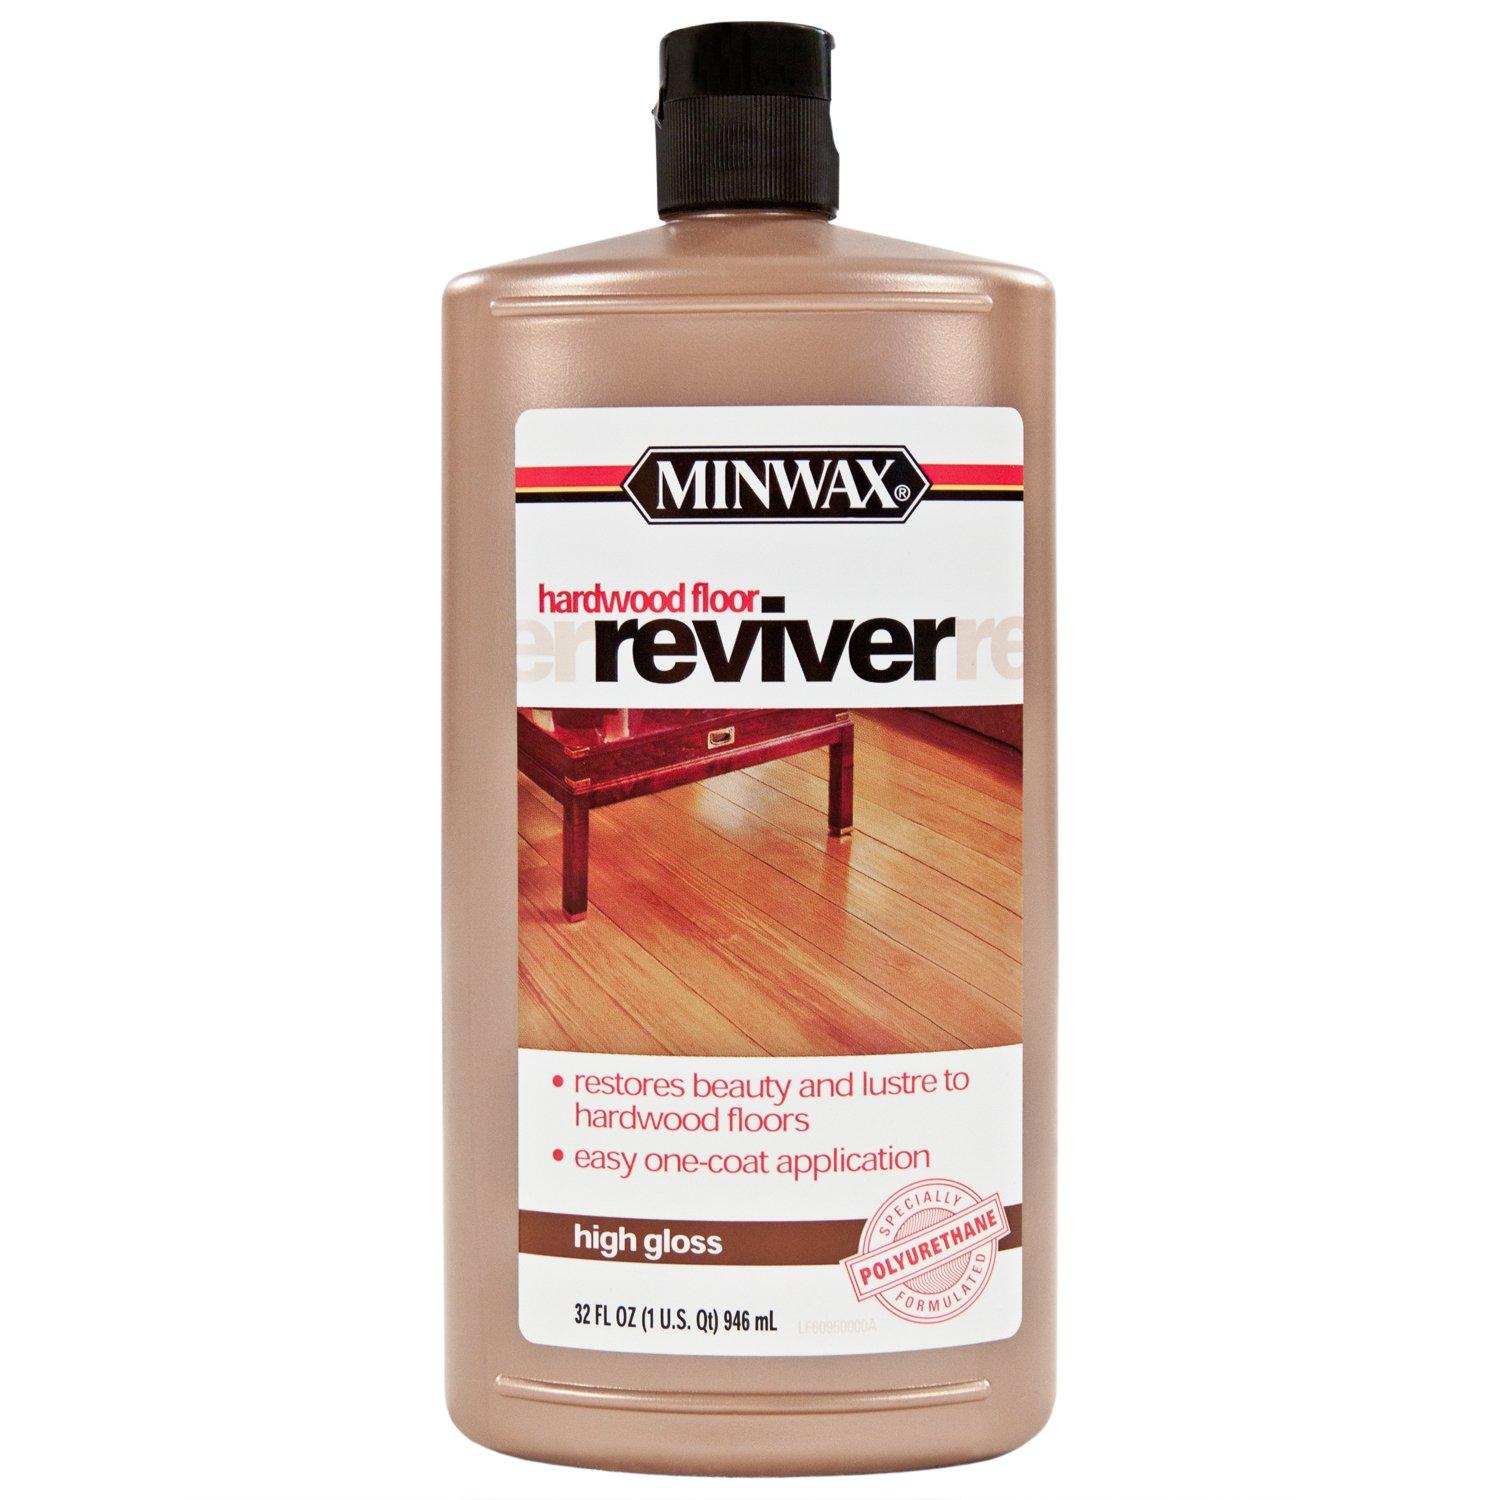 Minwax High Gloss Hardwood Floor, Hardwood Floor Reviver Reviews